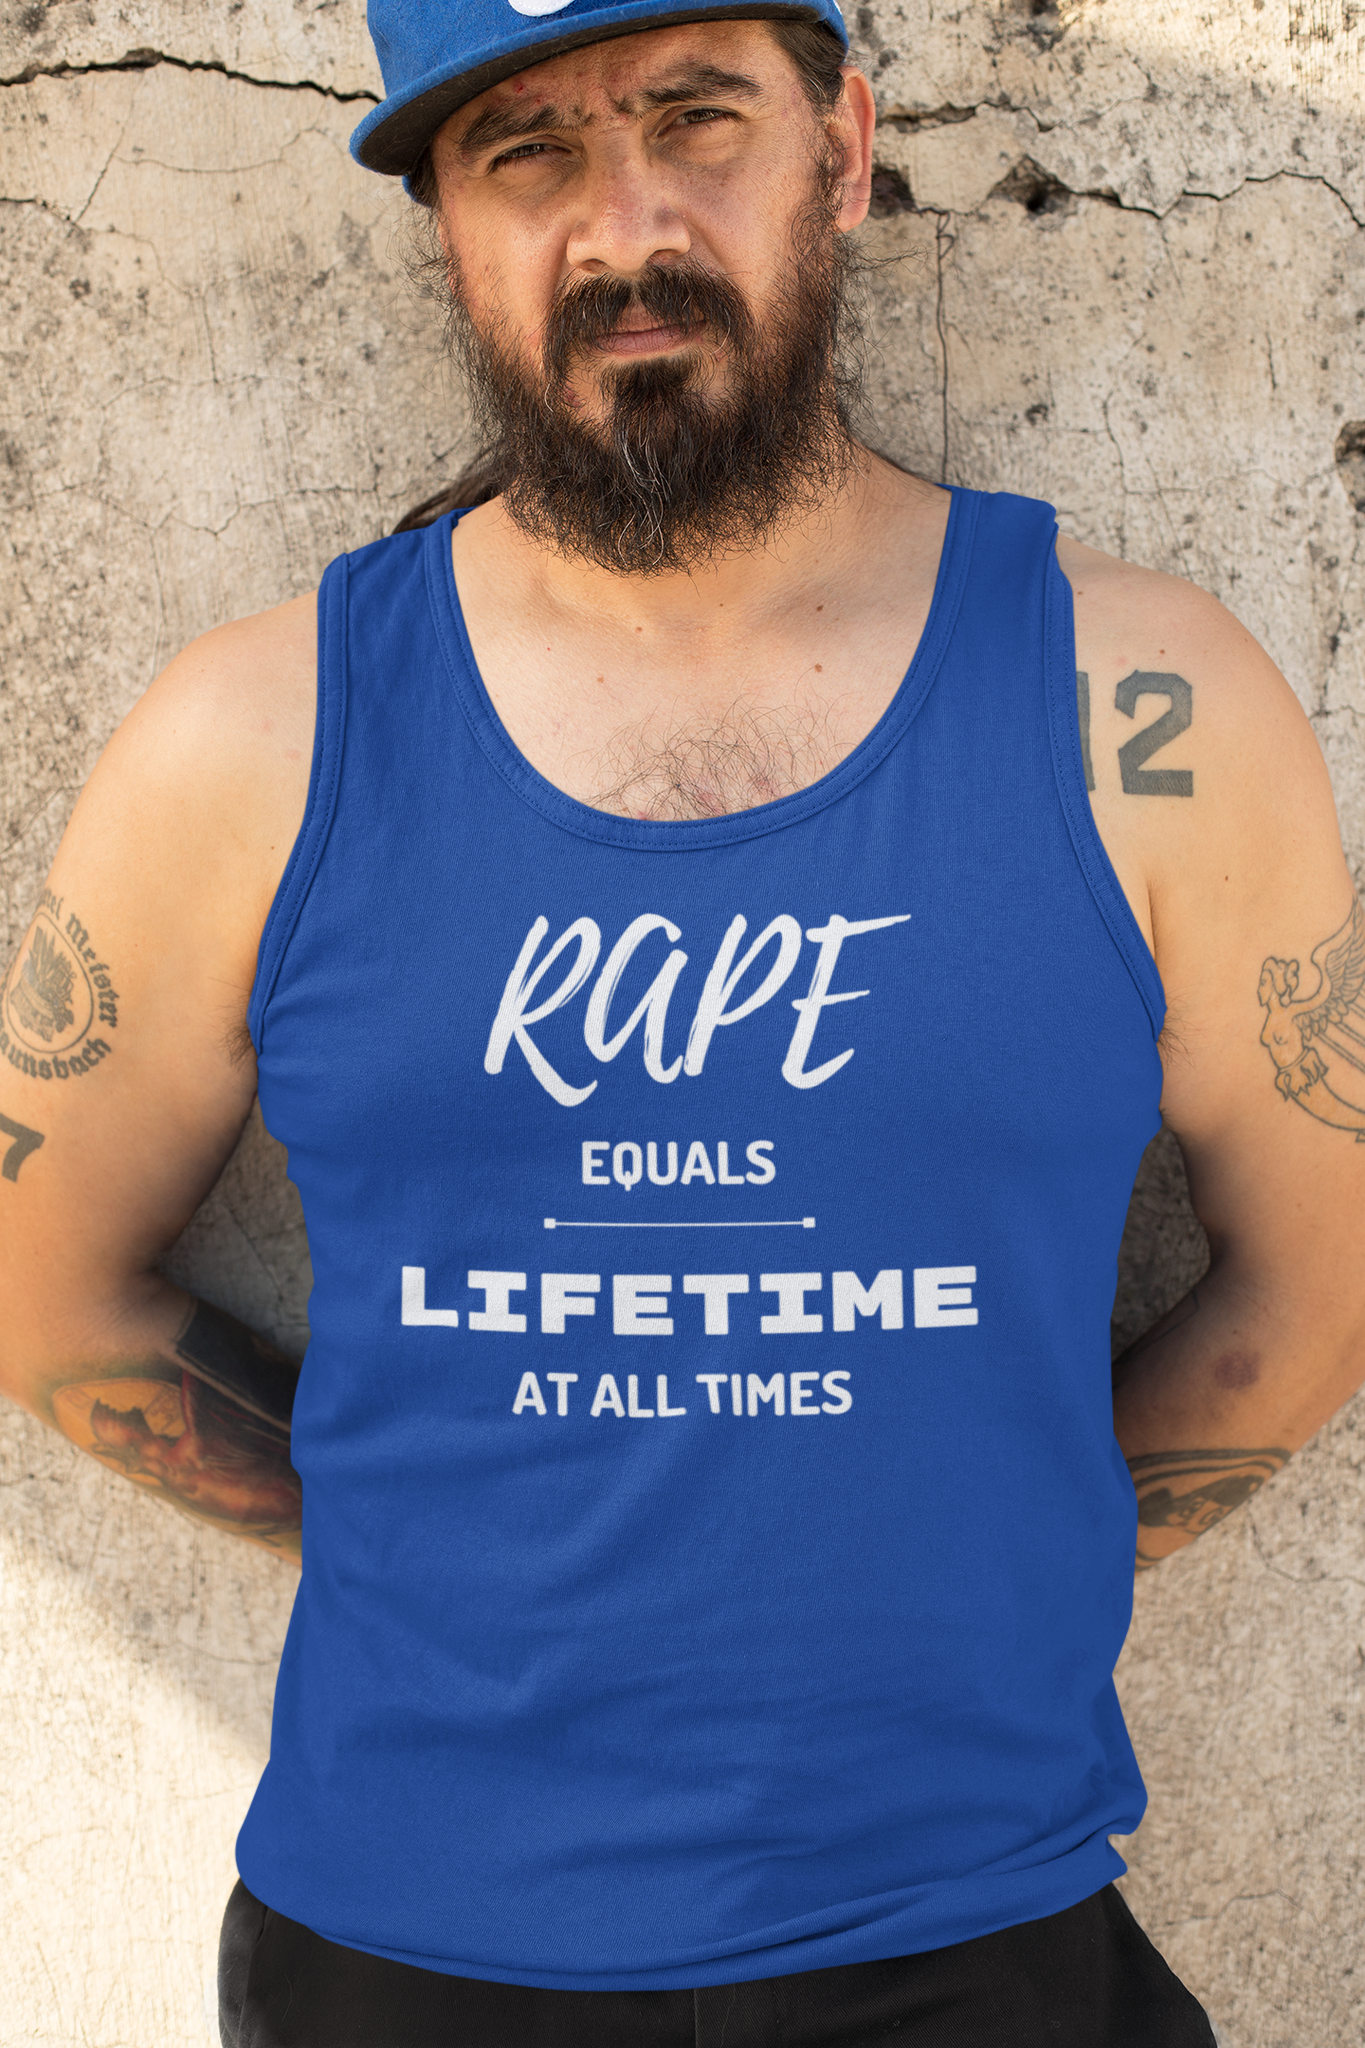 Rape Equals Lifetime At All Times Tank Top Men